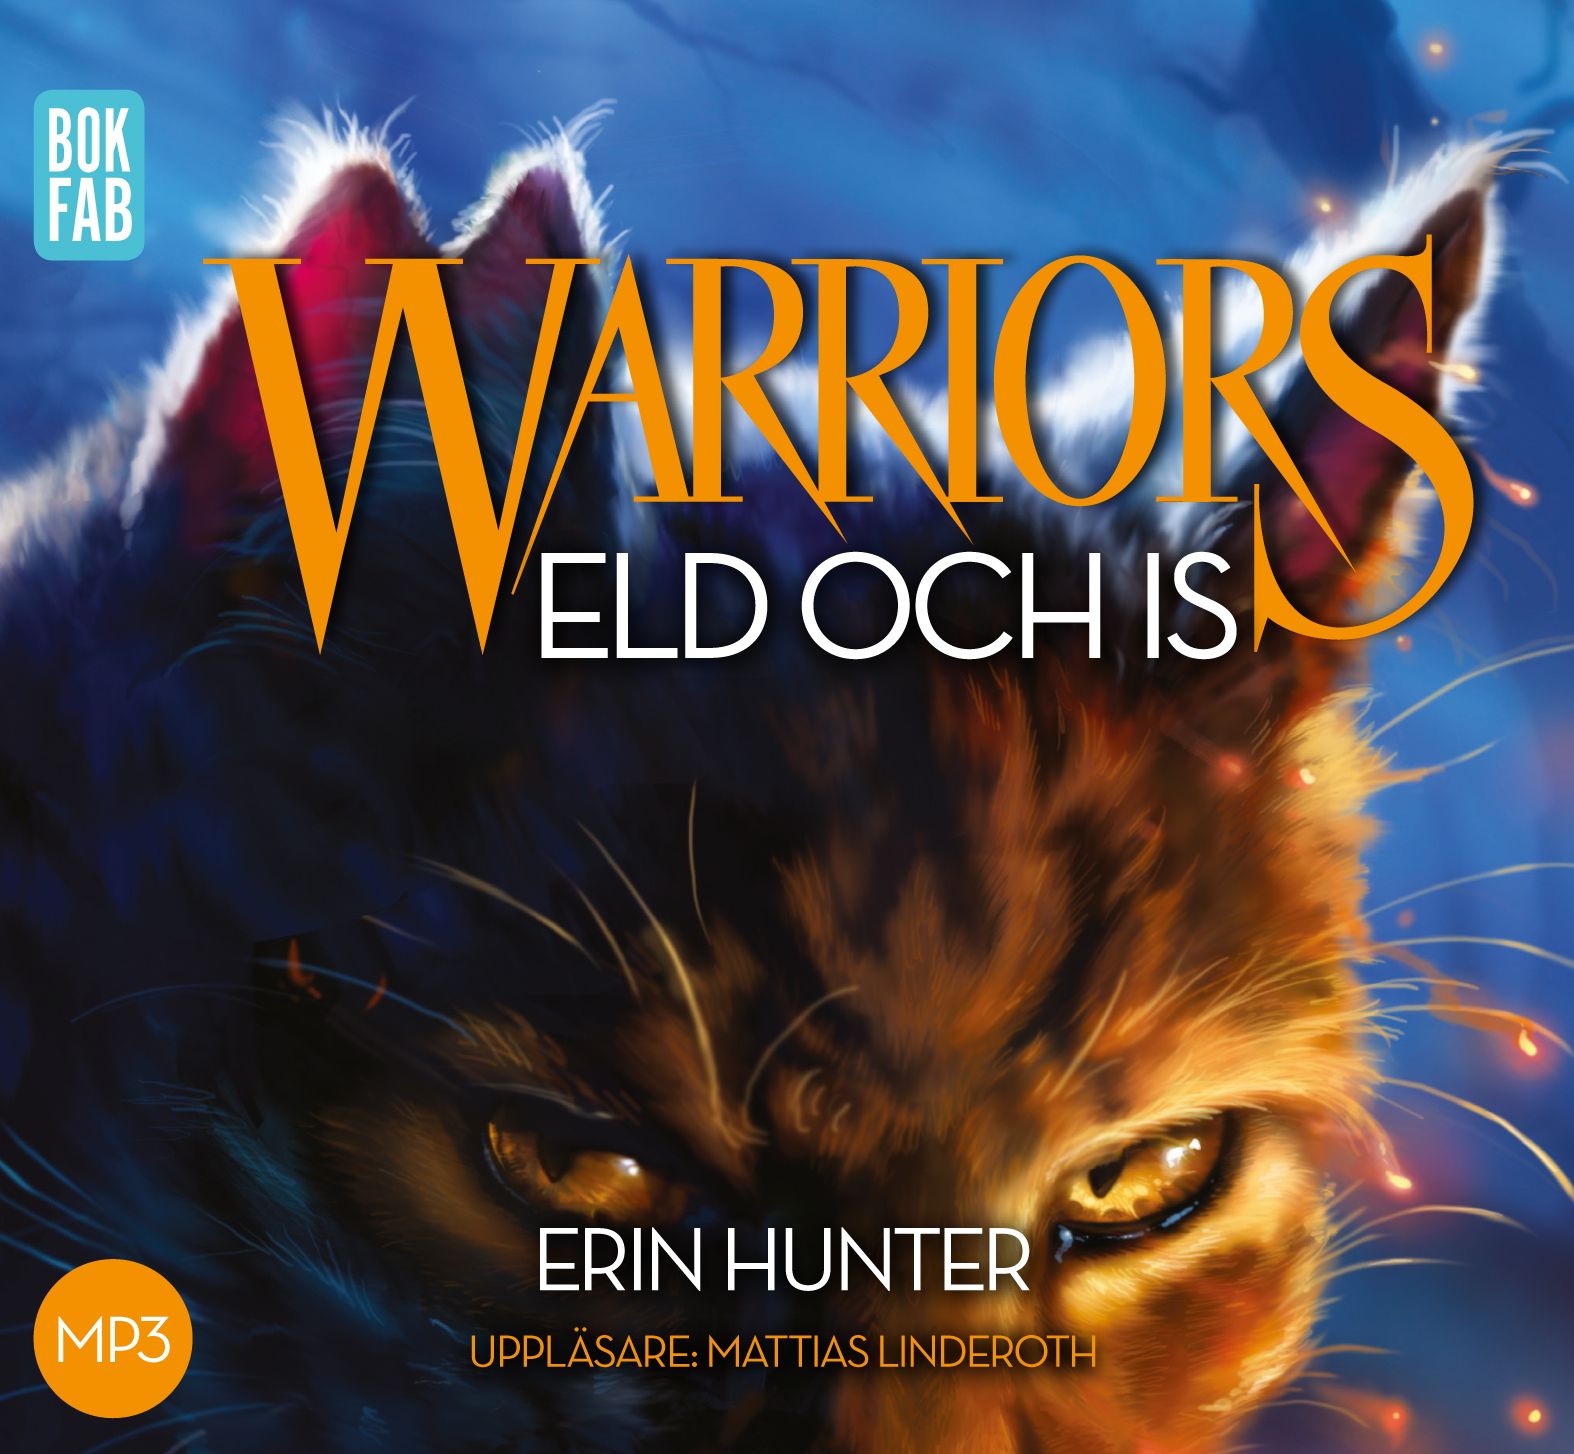 Warriors. Eld och is, audiobook by Erin Hunter